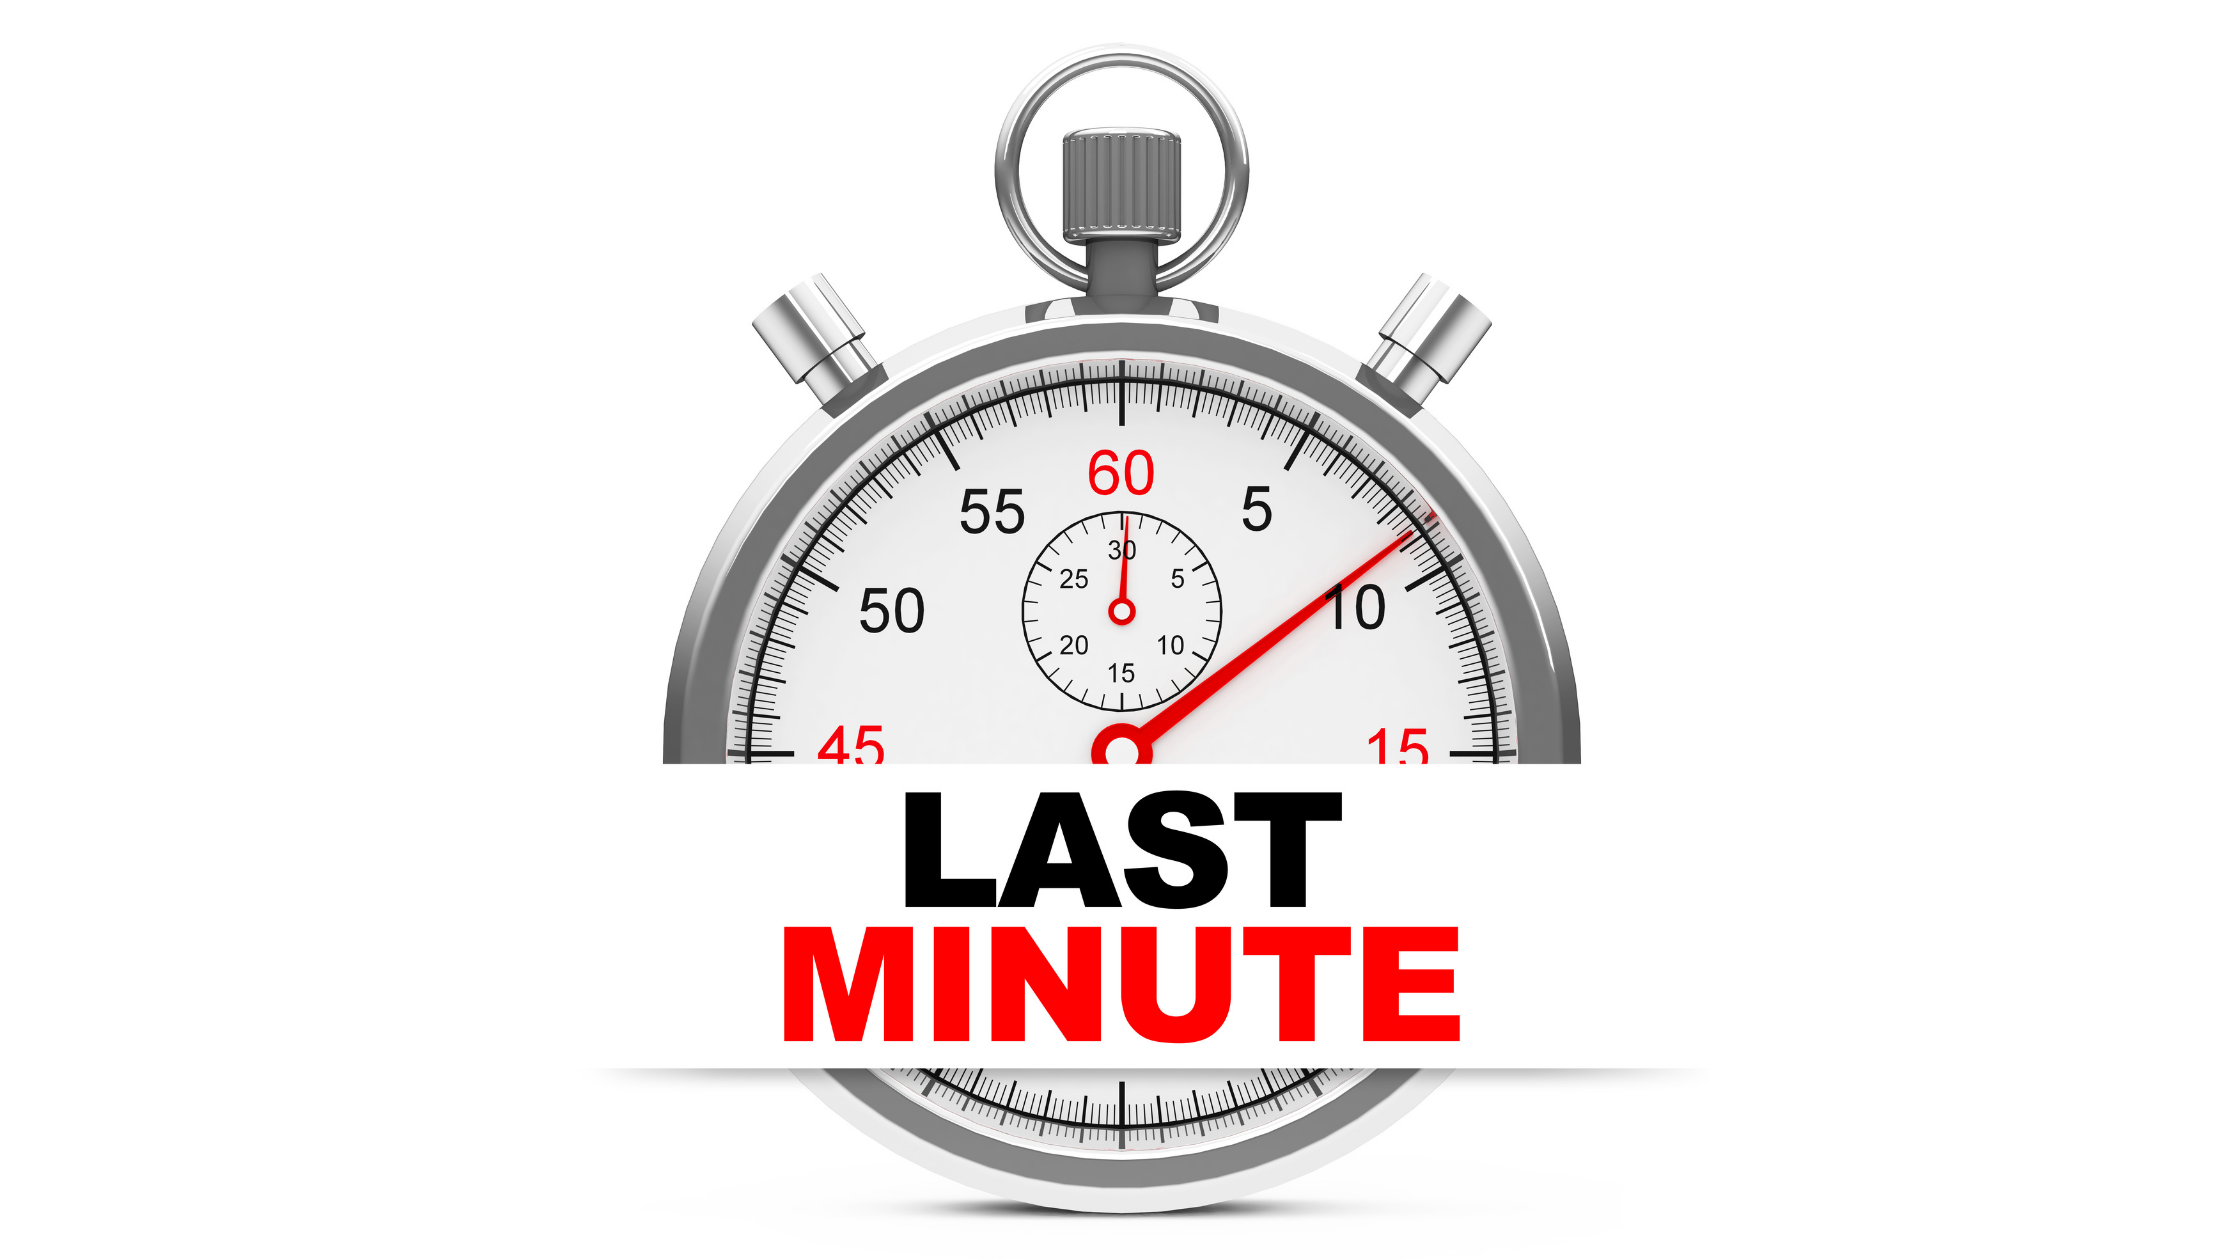 Last minute or Last-minute?(English grammar) - One Minute English